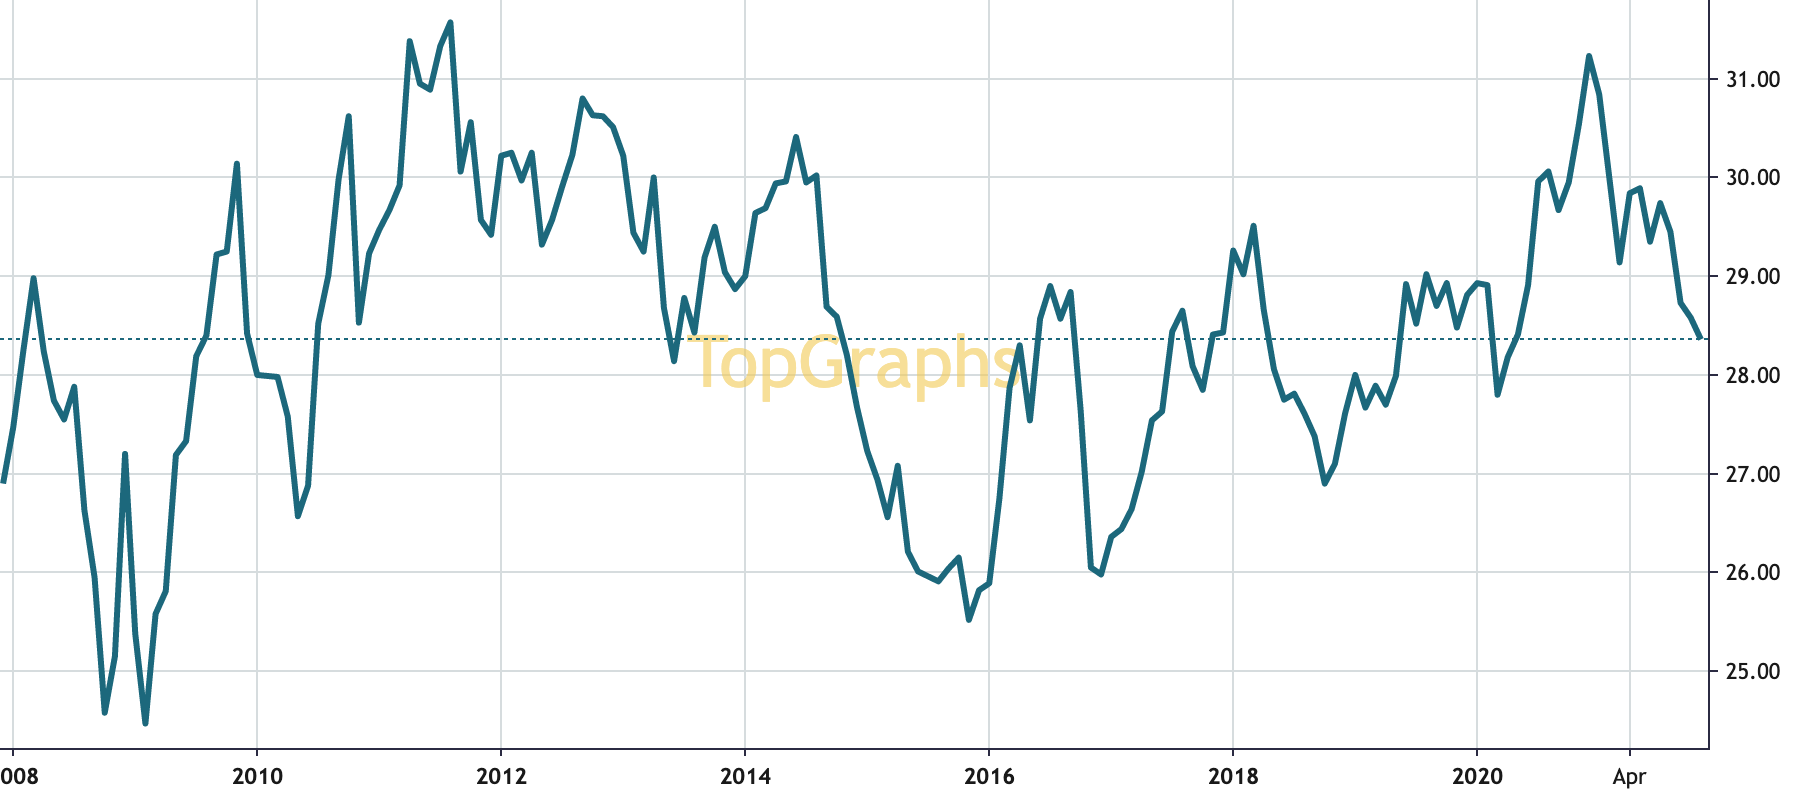 SPDR Series Trust - SPDR Bloomberg International Treasury Bond ETF share price history